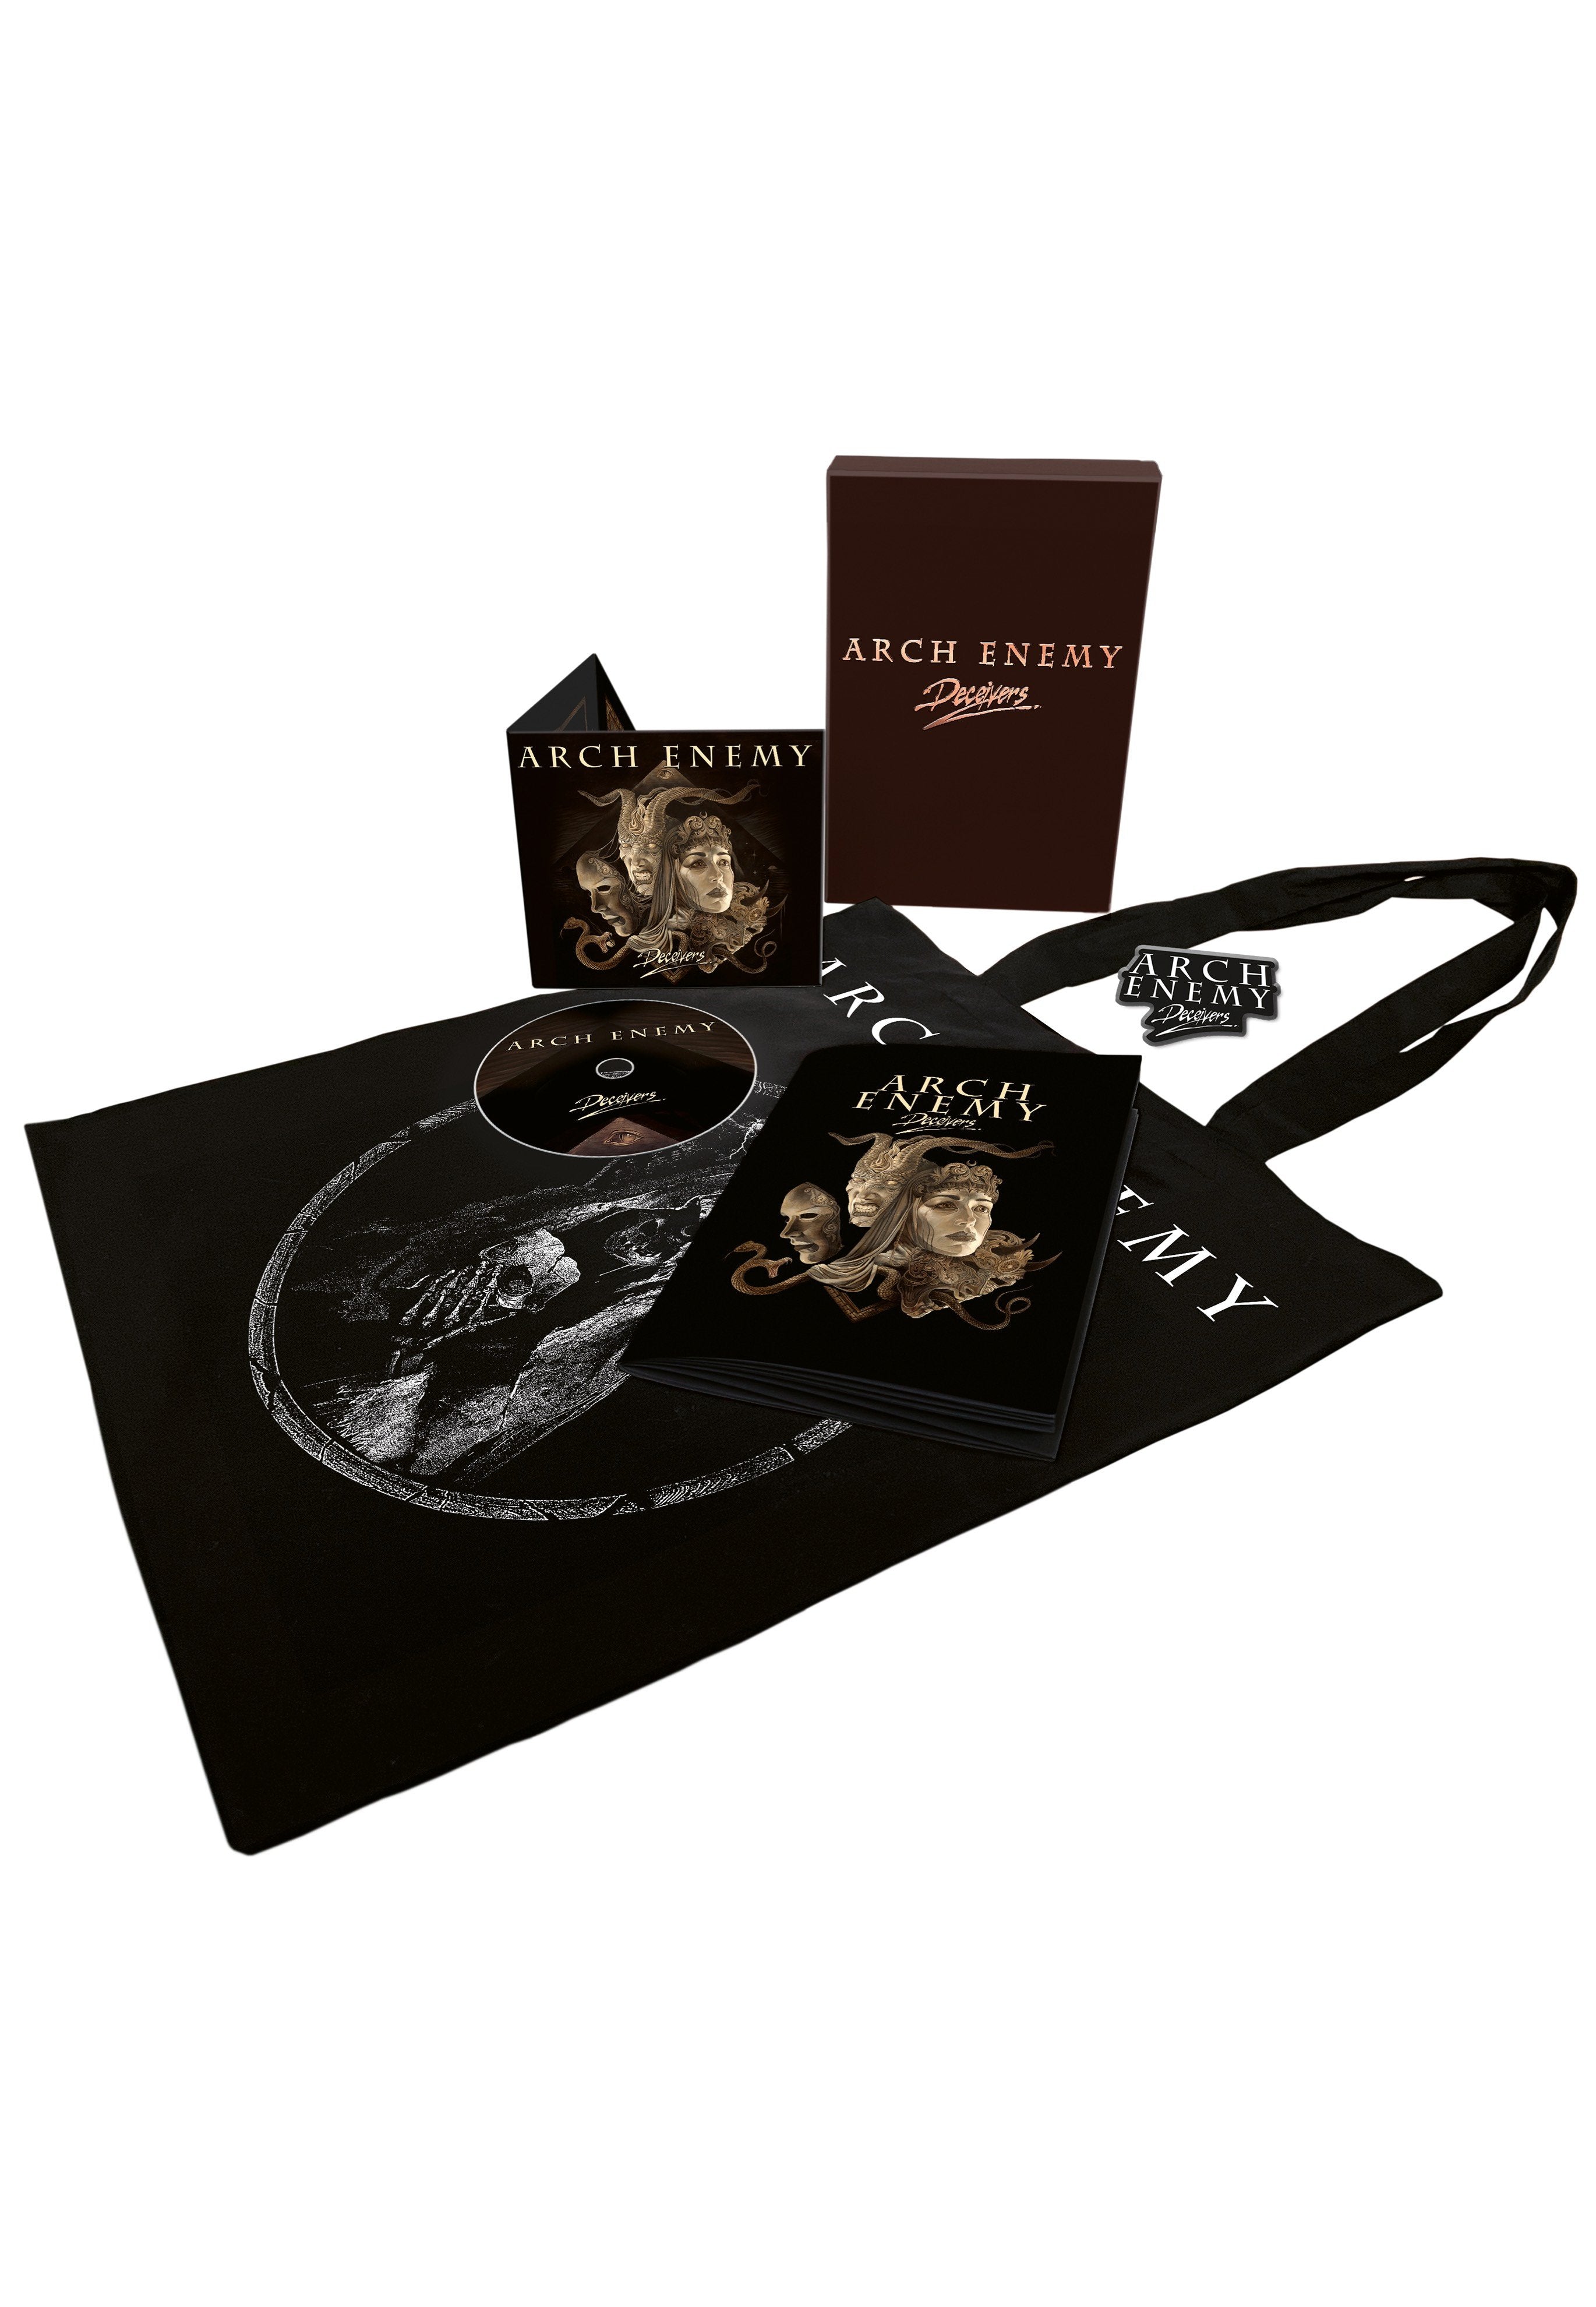 Arch Enemy - Deceivers Ltd. Deluxe - CD Box Set